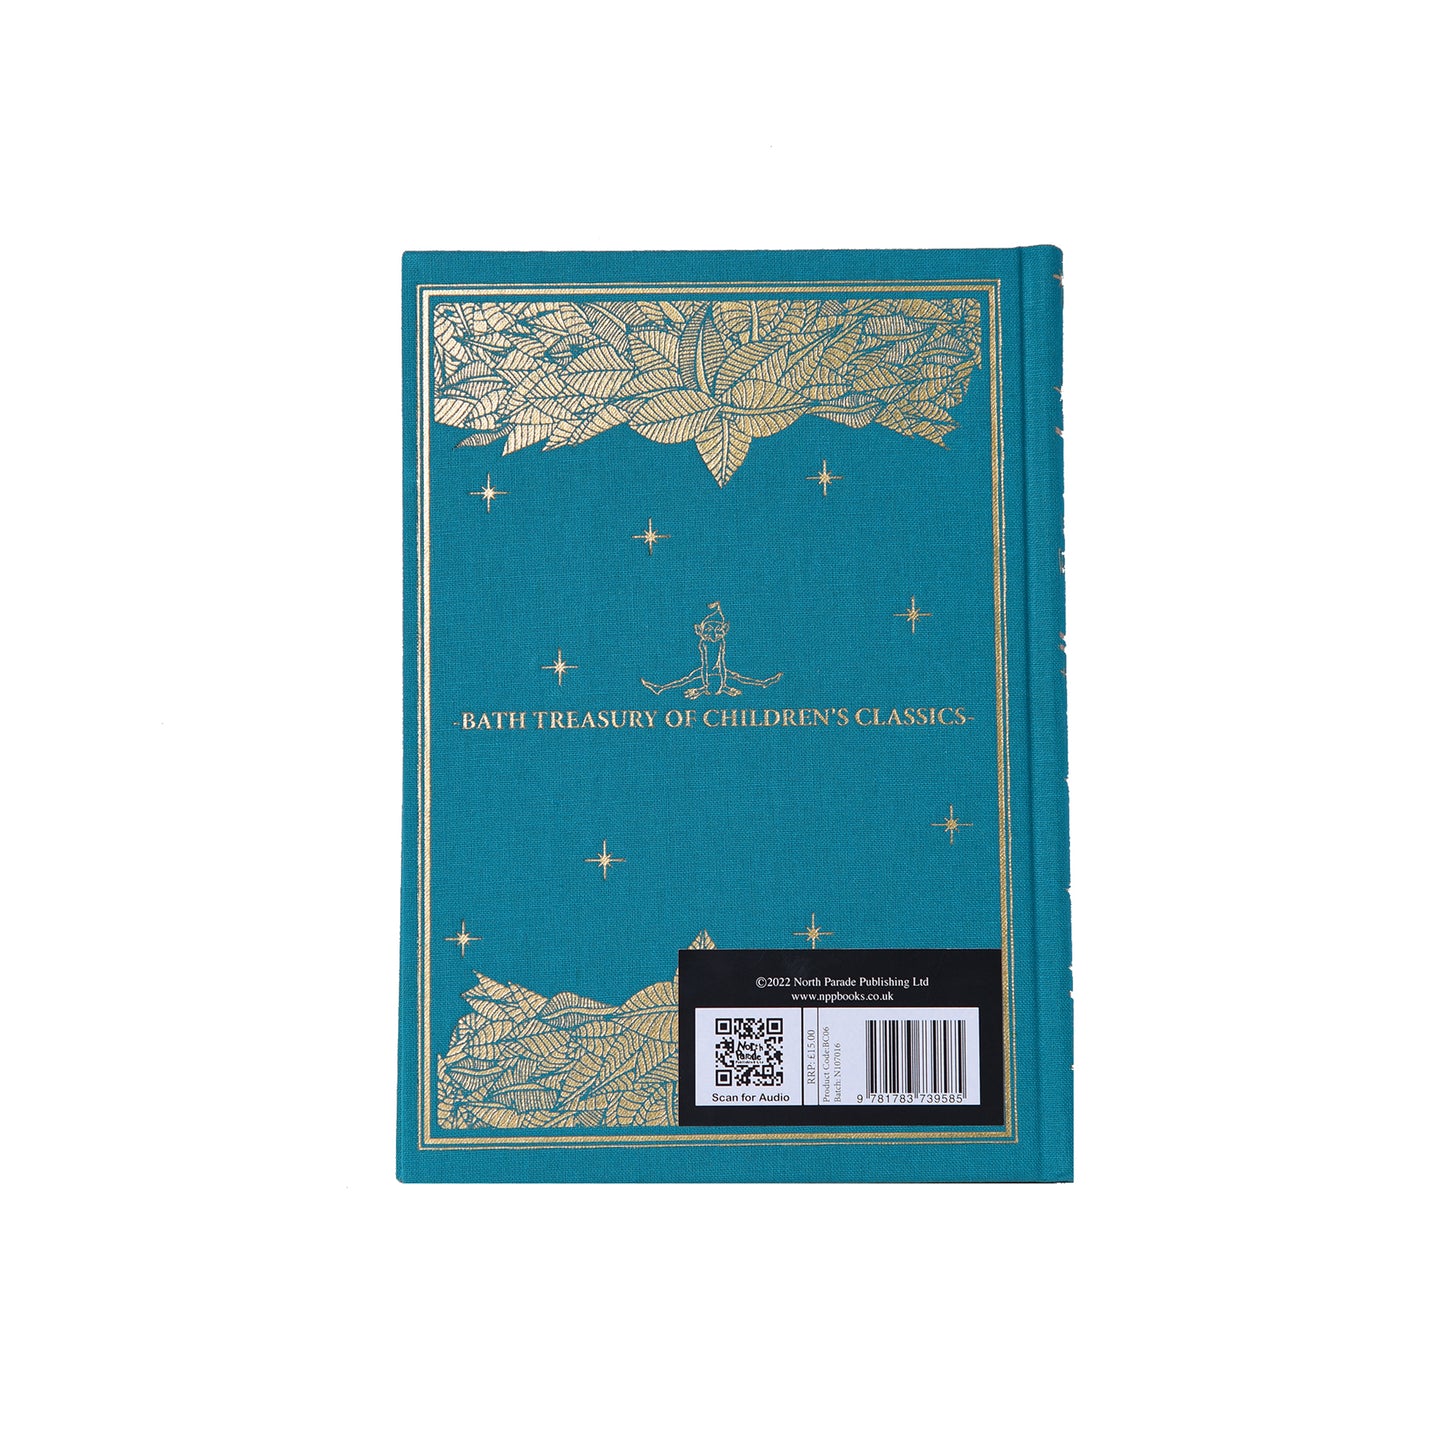 The Wind In The Willows (Bath Treasury of Children's Classics) (Bath Classics) Hardcover